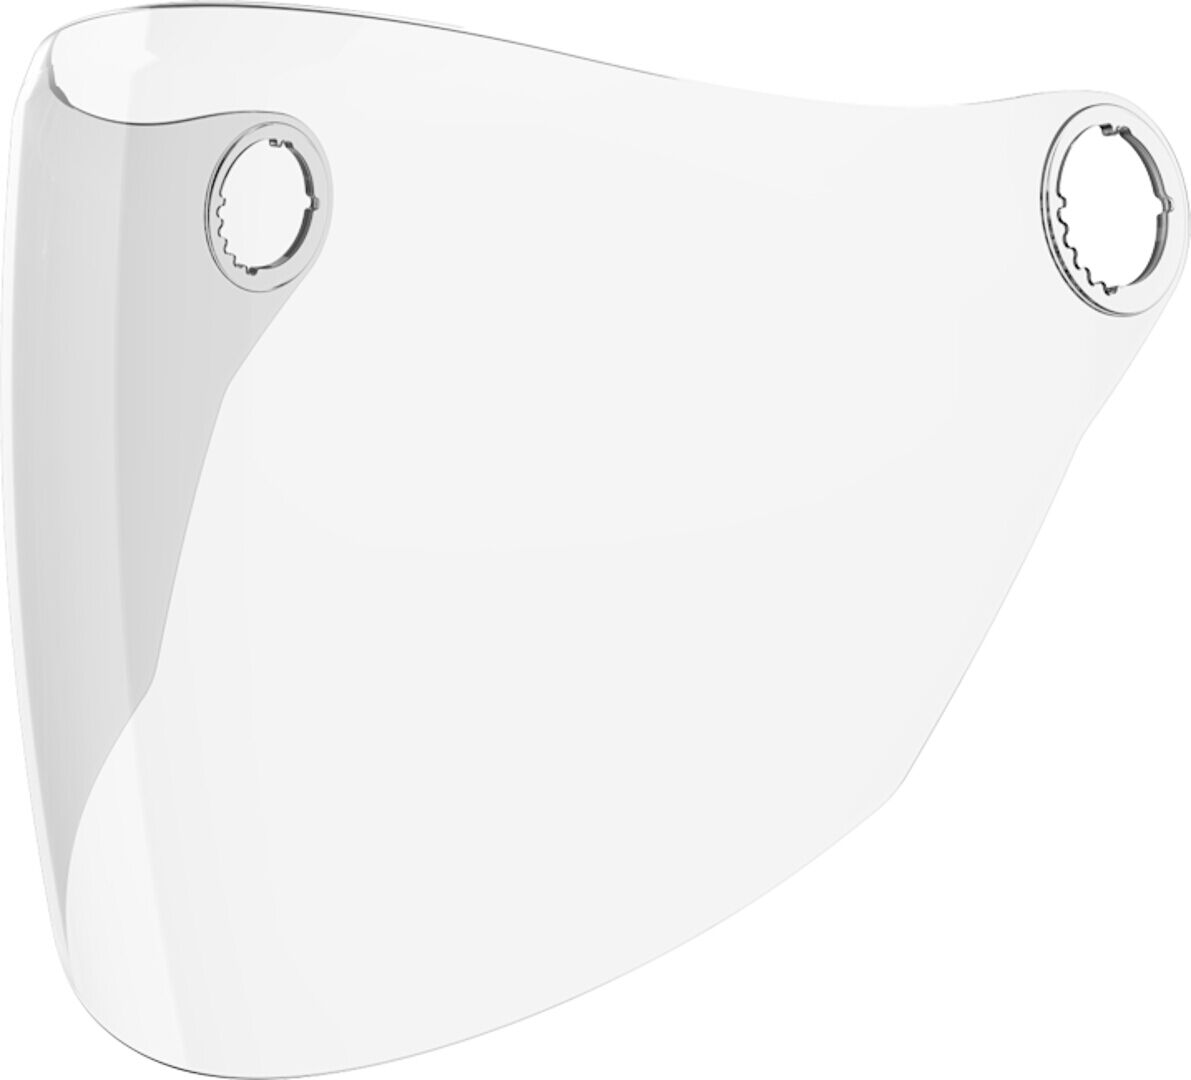 NEXX SX.60 Visera plana - transparente (un tamaño)